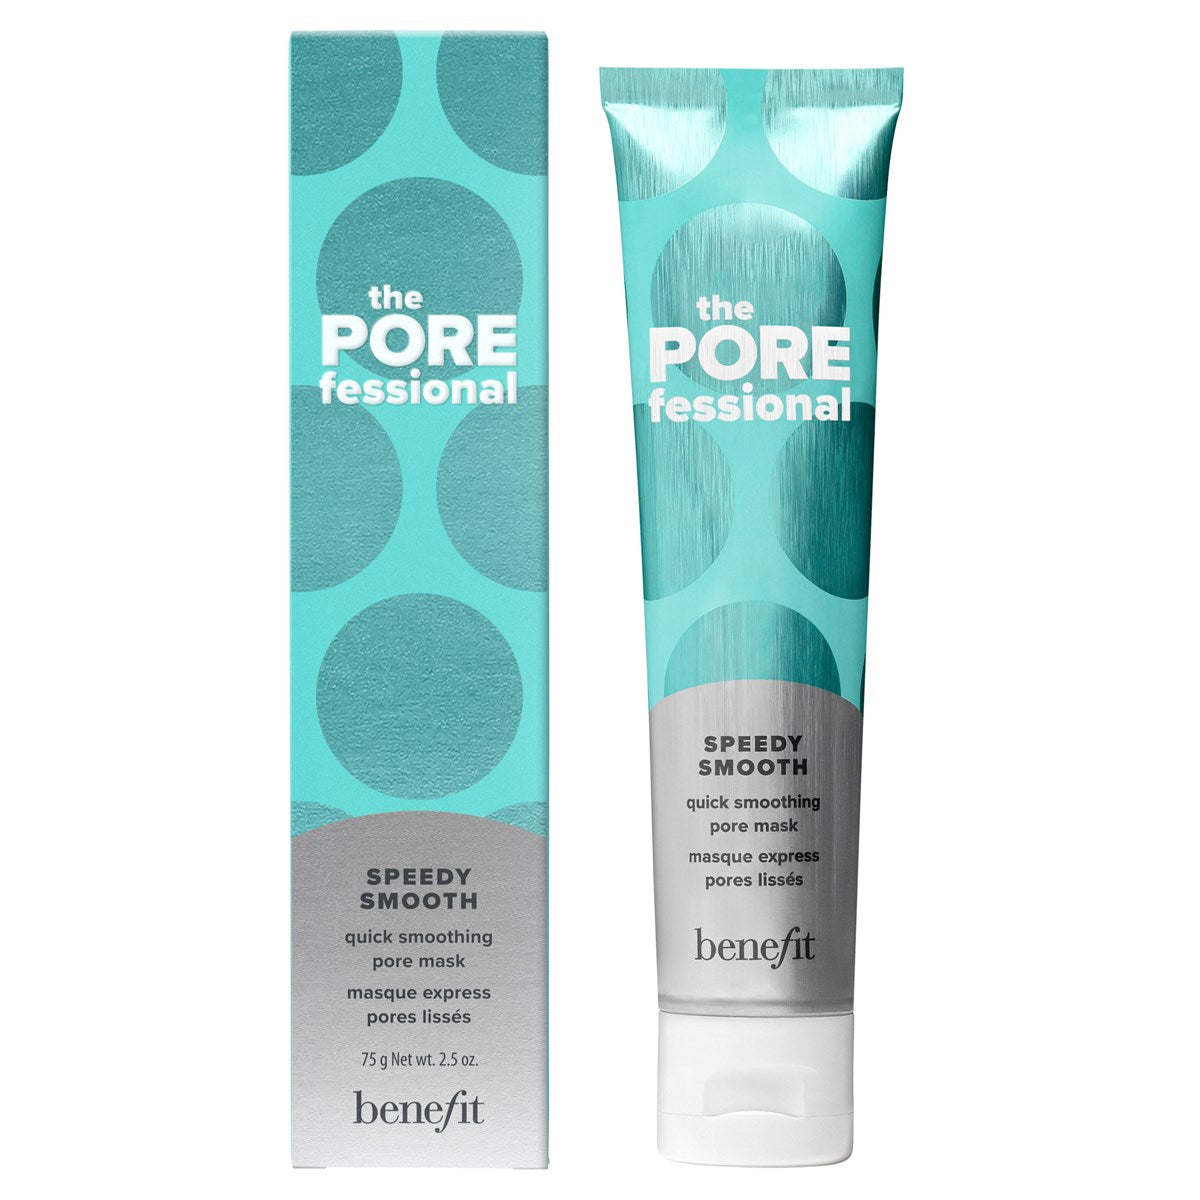 BENEFIT-The POREfessional Speedy Smooth Pore Mask